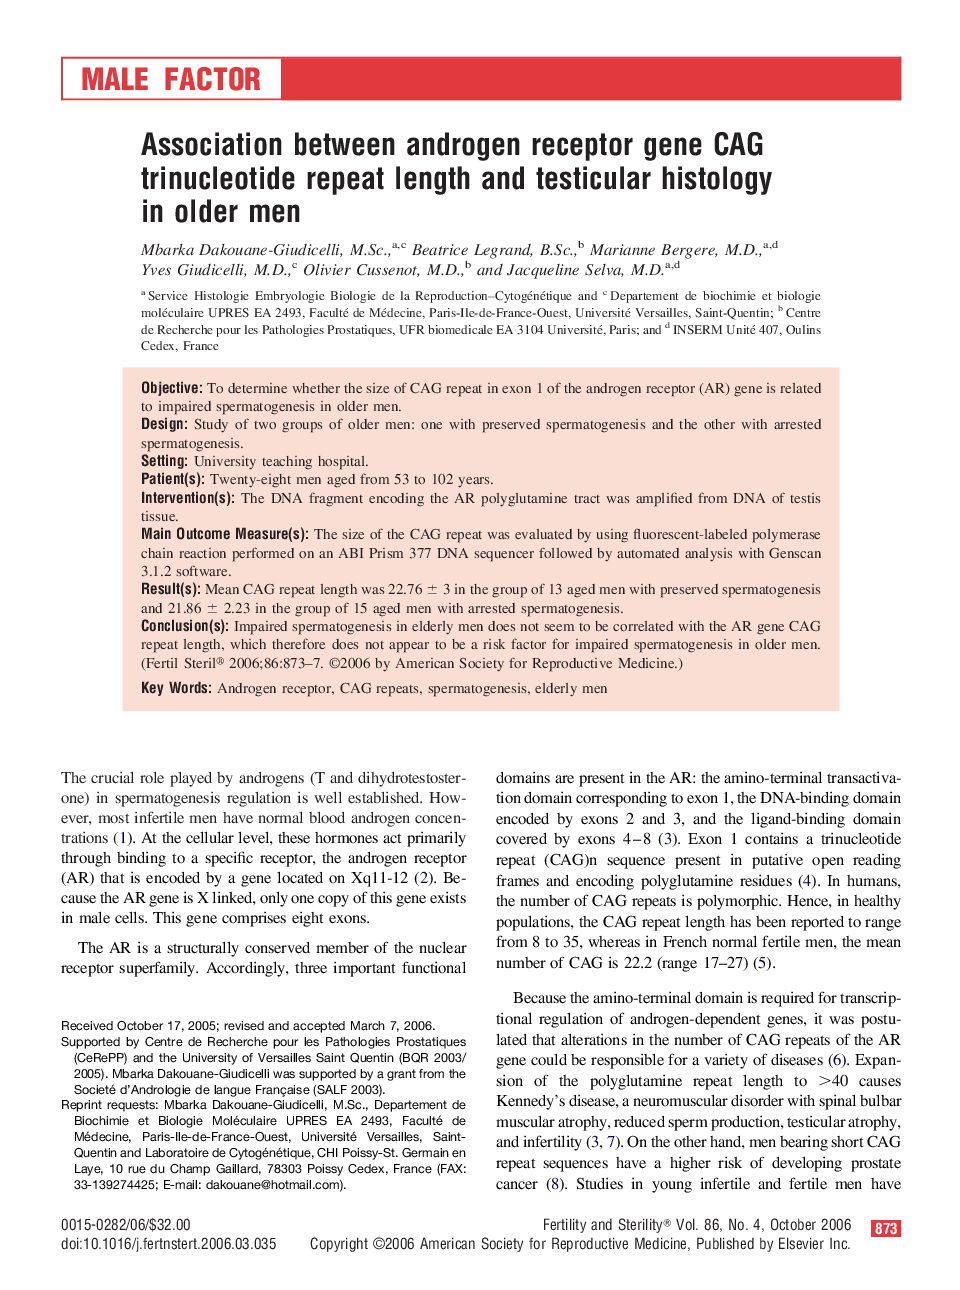 Association between androgen receptor gene CAG trinucleotide repeat length and testicular histology in older men 